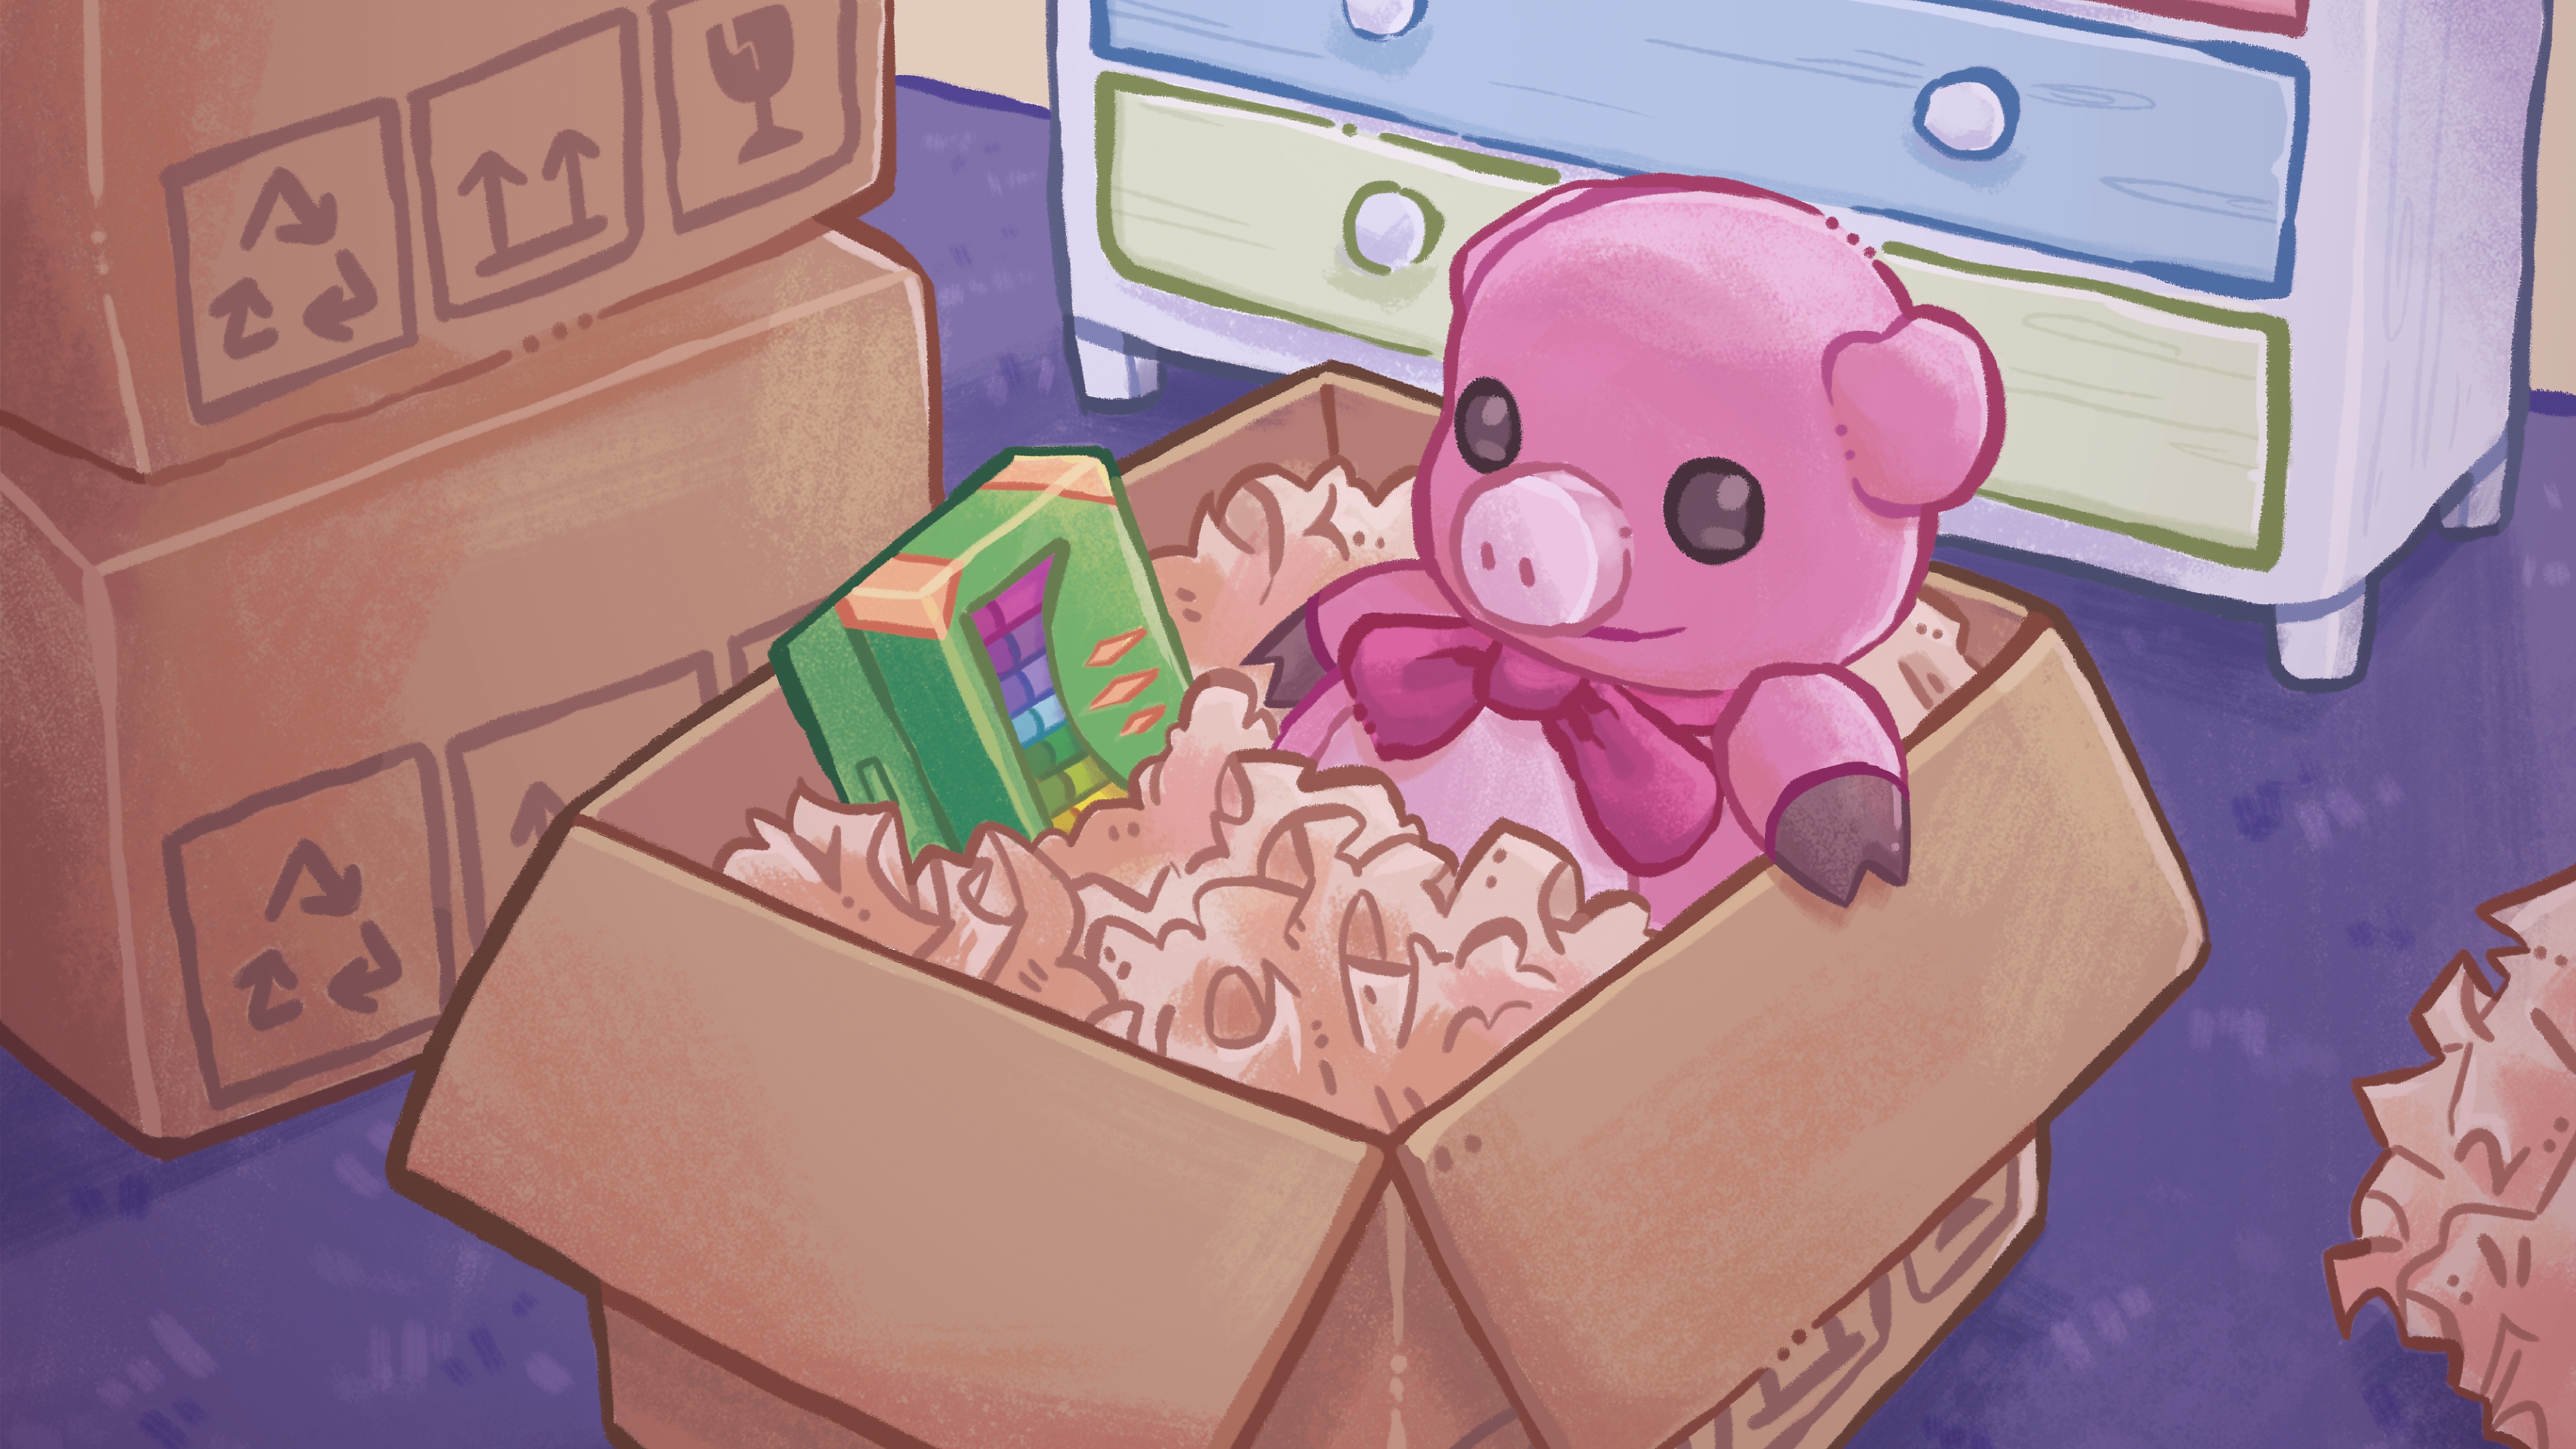 Unpacking εικαστικό προώθησης που απεικονίζει ένα πολύχρωμο, σχεδιασμένο στο χέρι λούτρινο αρκουδάκι και ένα κουτί με κηρομπογιές μέσα σε κούτα.